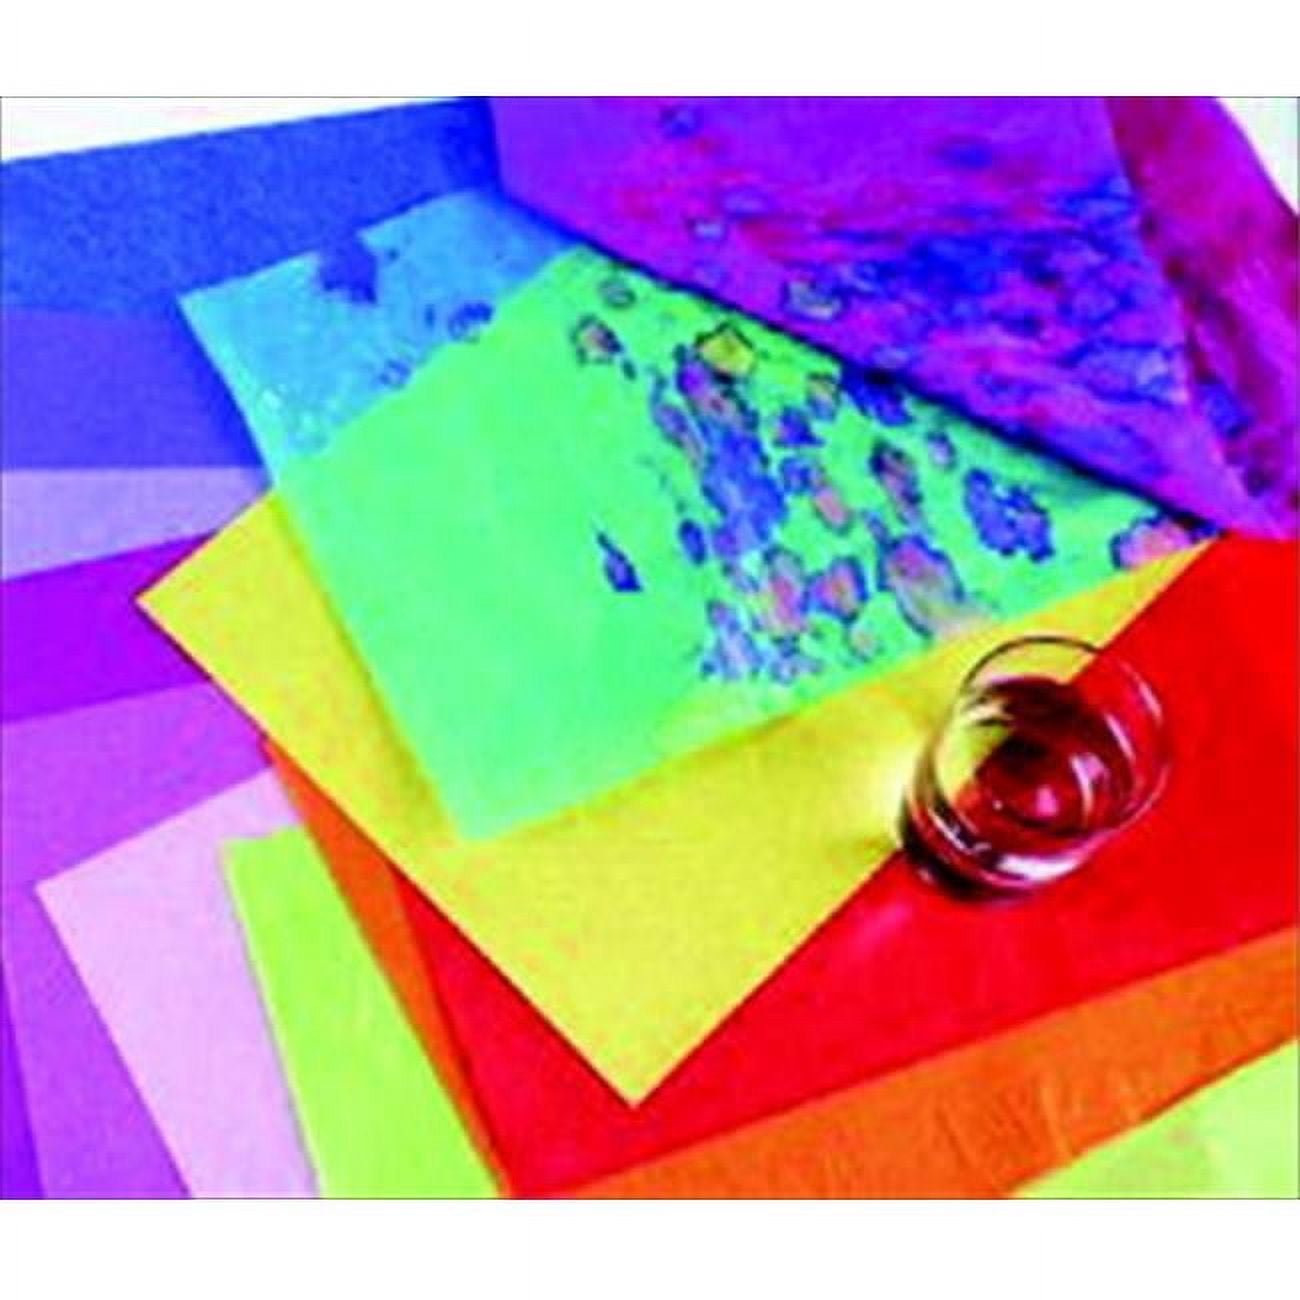 Spectra 006222 Deluxe Bleeding Recyclable Art Tissue Paper, Orange - 24 Sheets